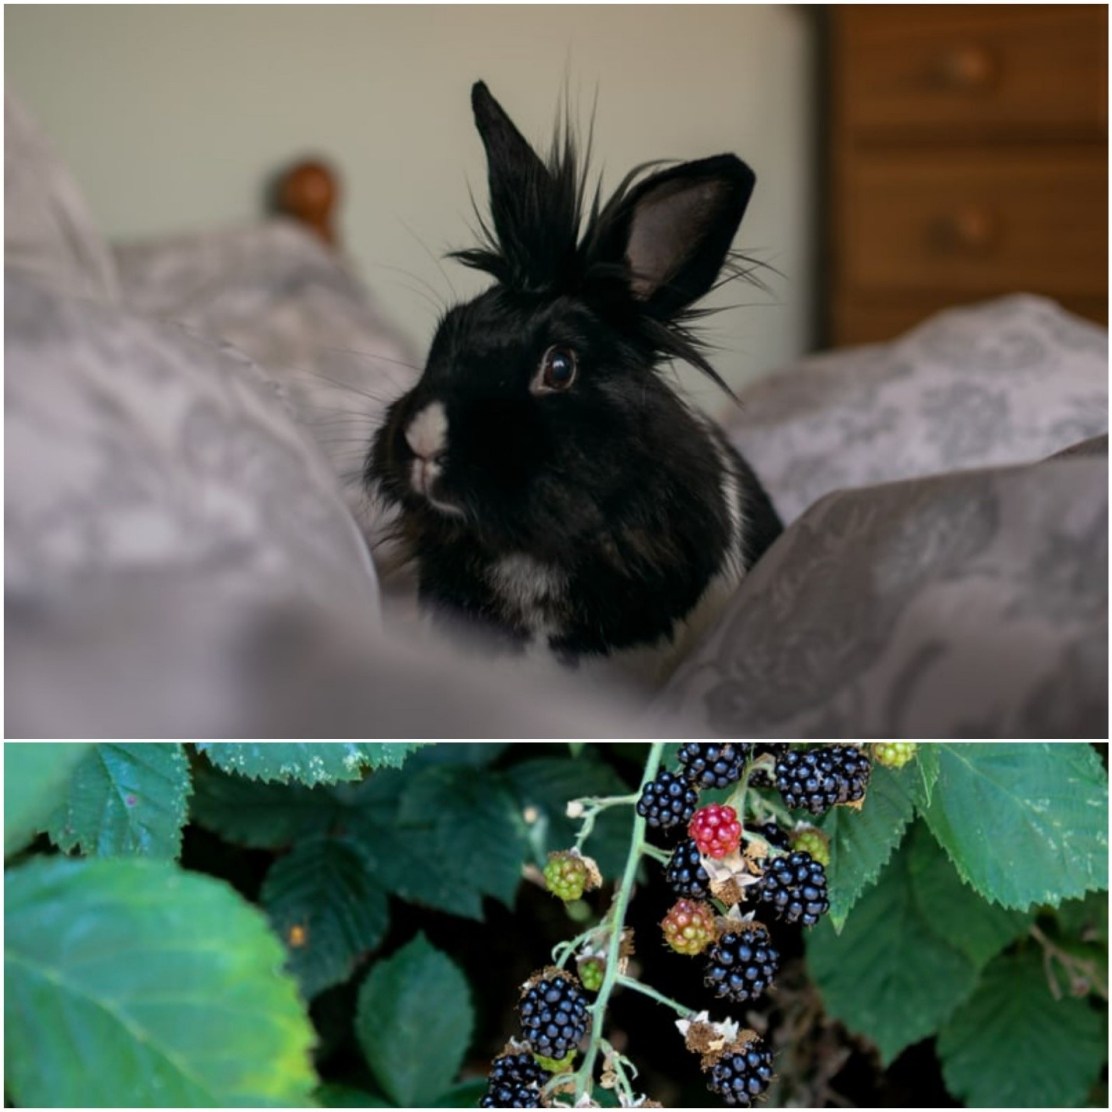 can rabbits eat blackberries